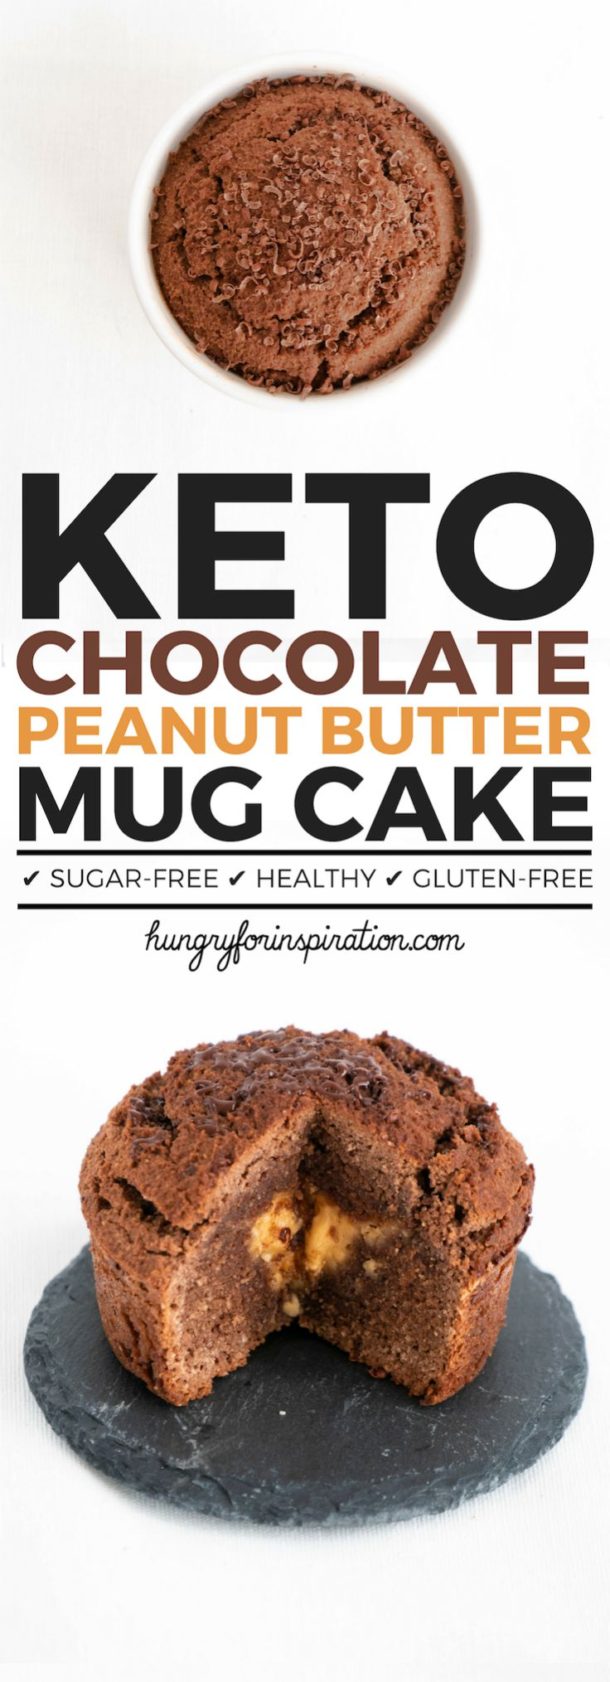 Chocolate Keto Mug Cake With Peanut Butter Core (Keto Dessert, Low Carb ...